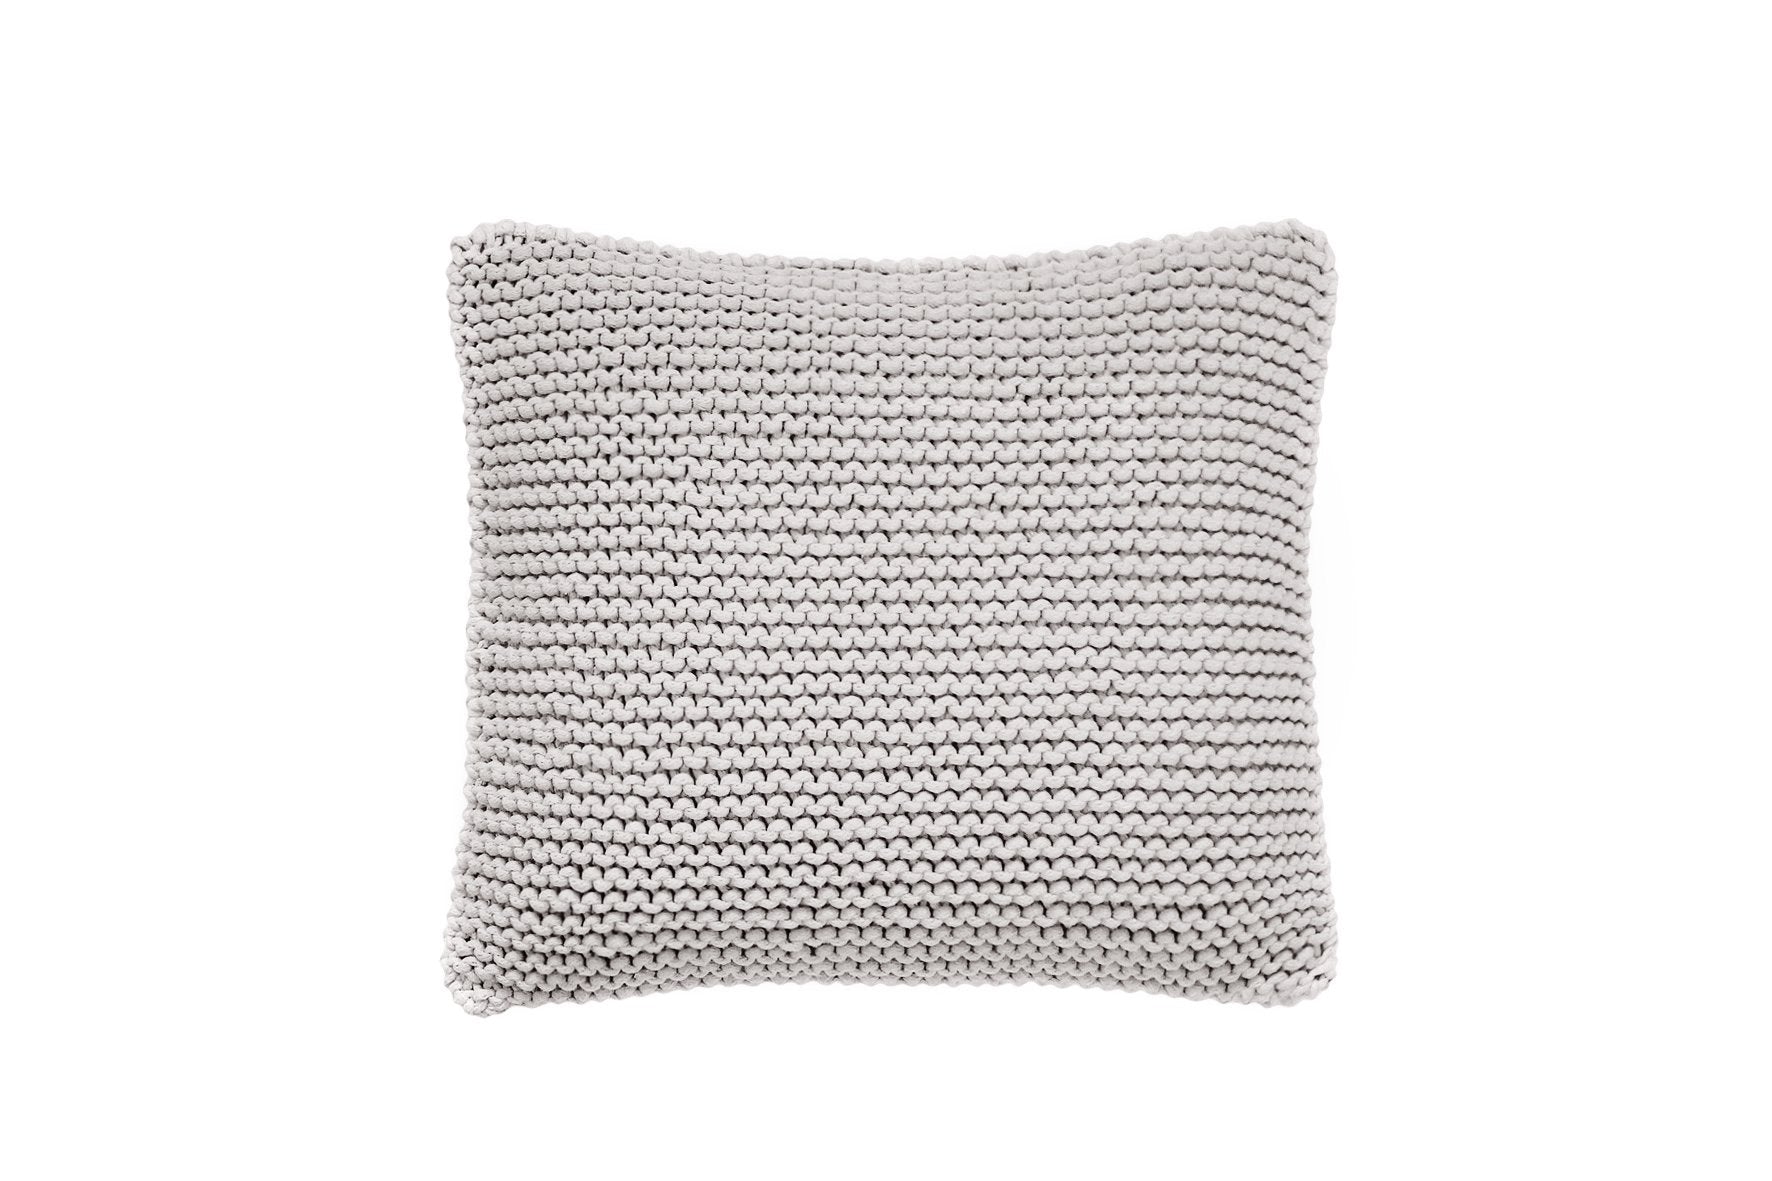 Zuri House Knitted Cushion | OATMEAL - 1 cushion 45 x 45 cm